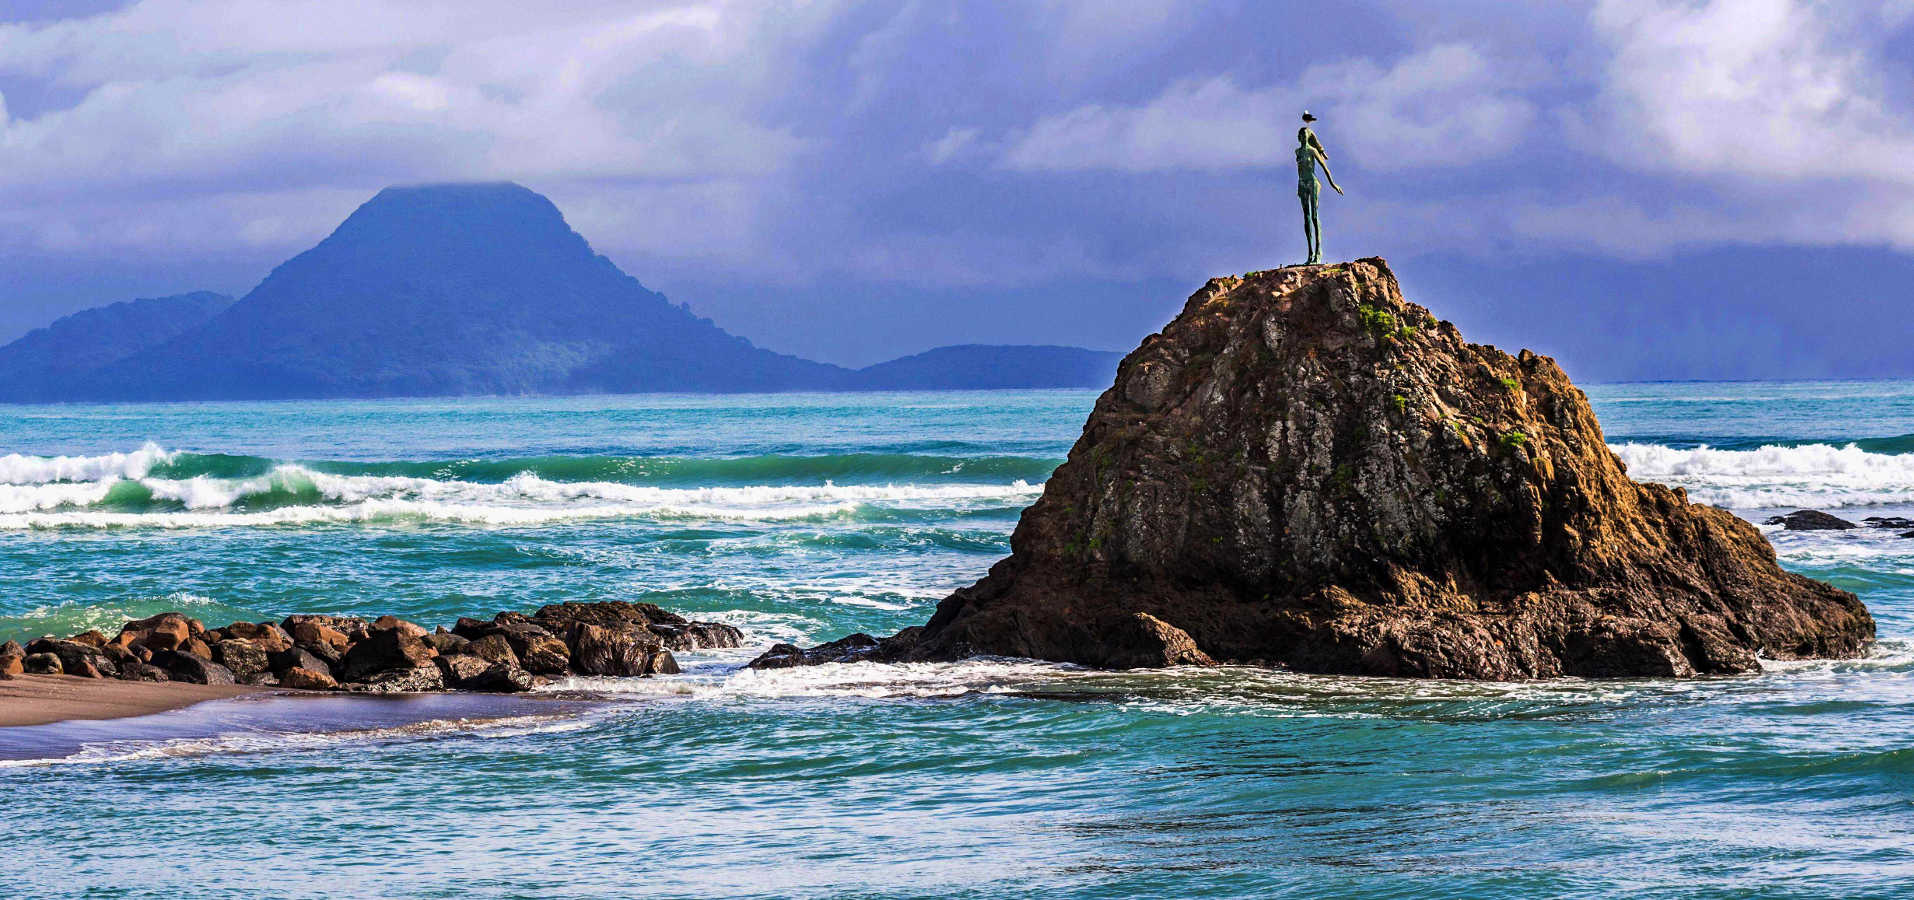 The Lady on the Rock sculpture, Whakatane, Bay of Plenty